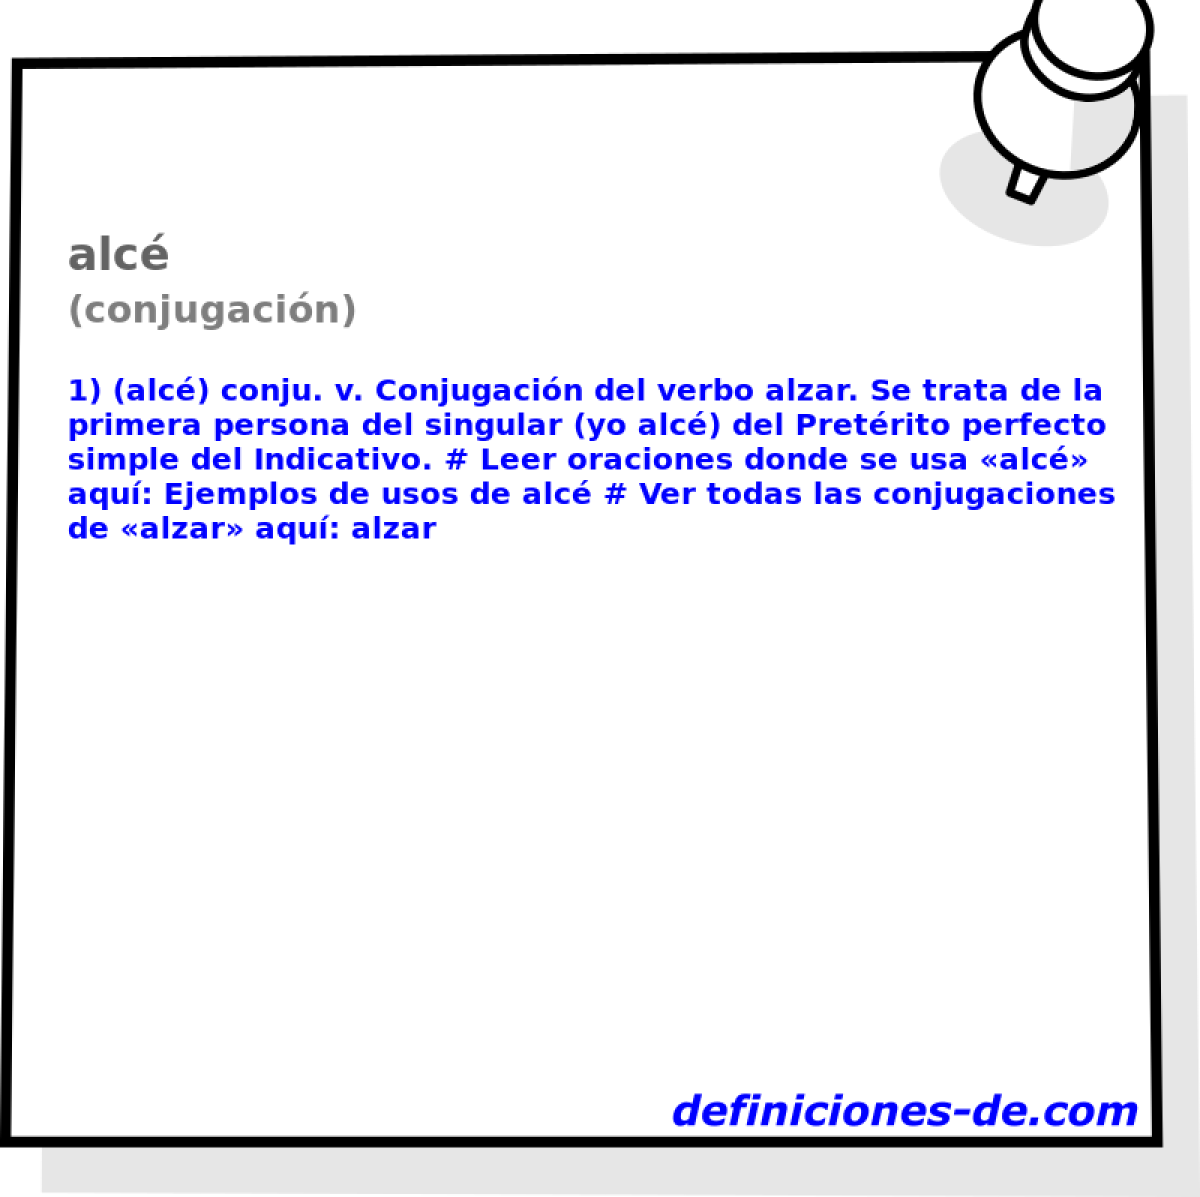 alc (conjugacin)